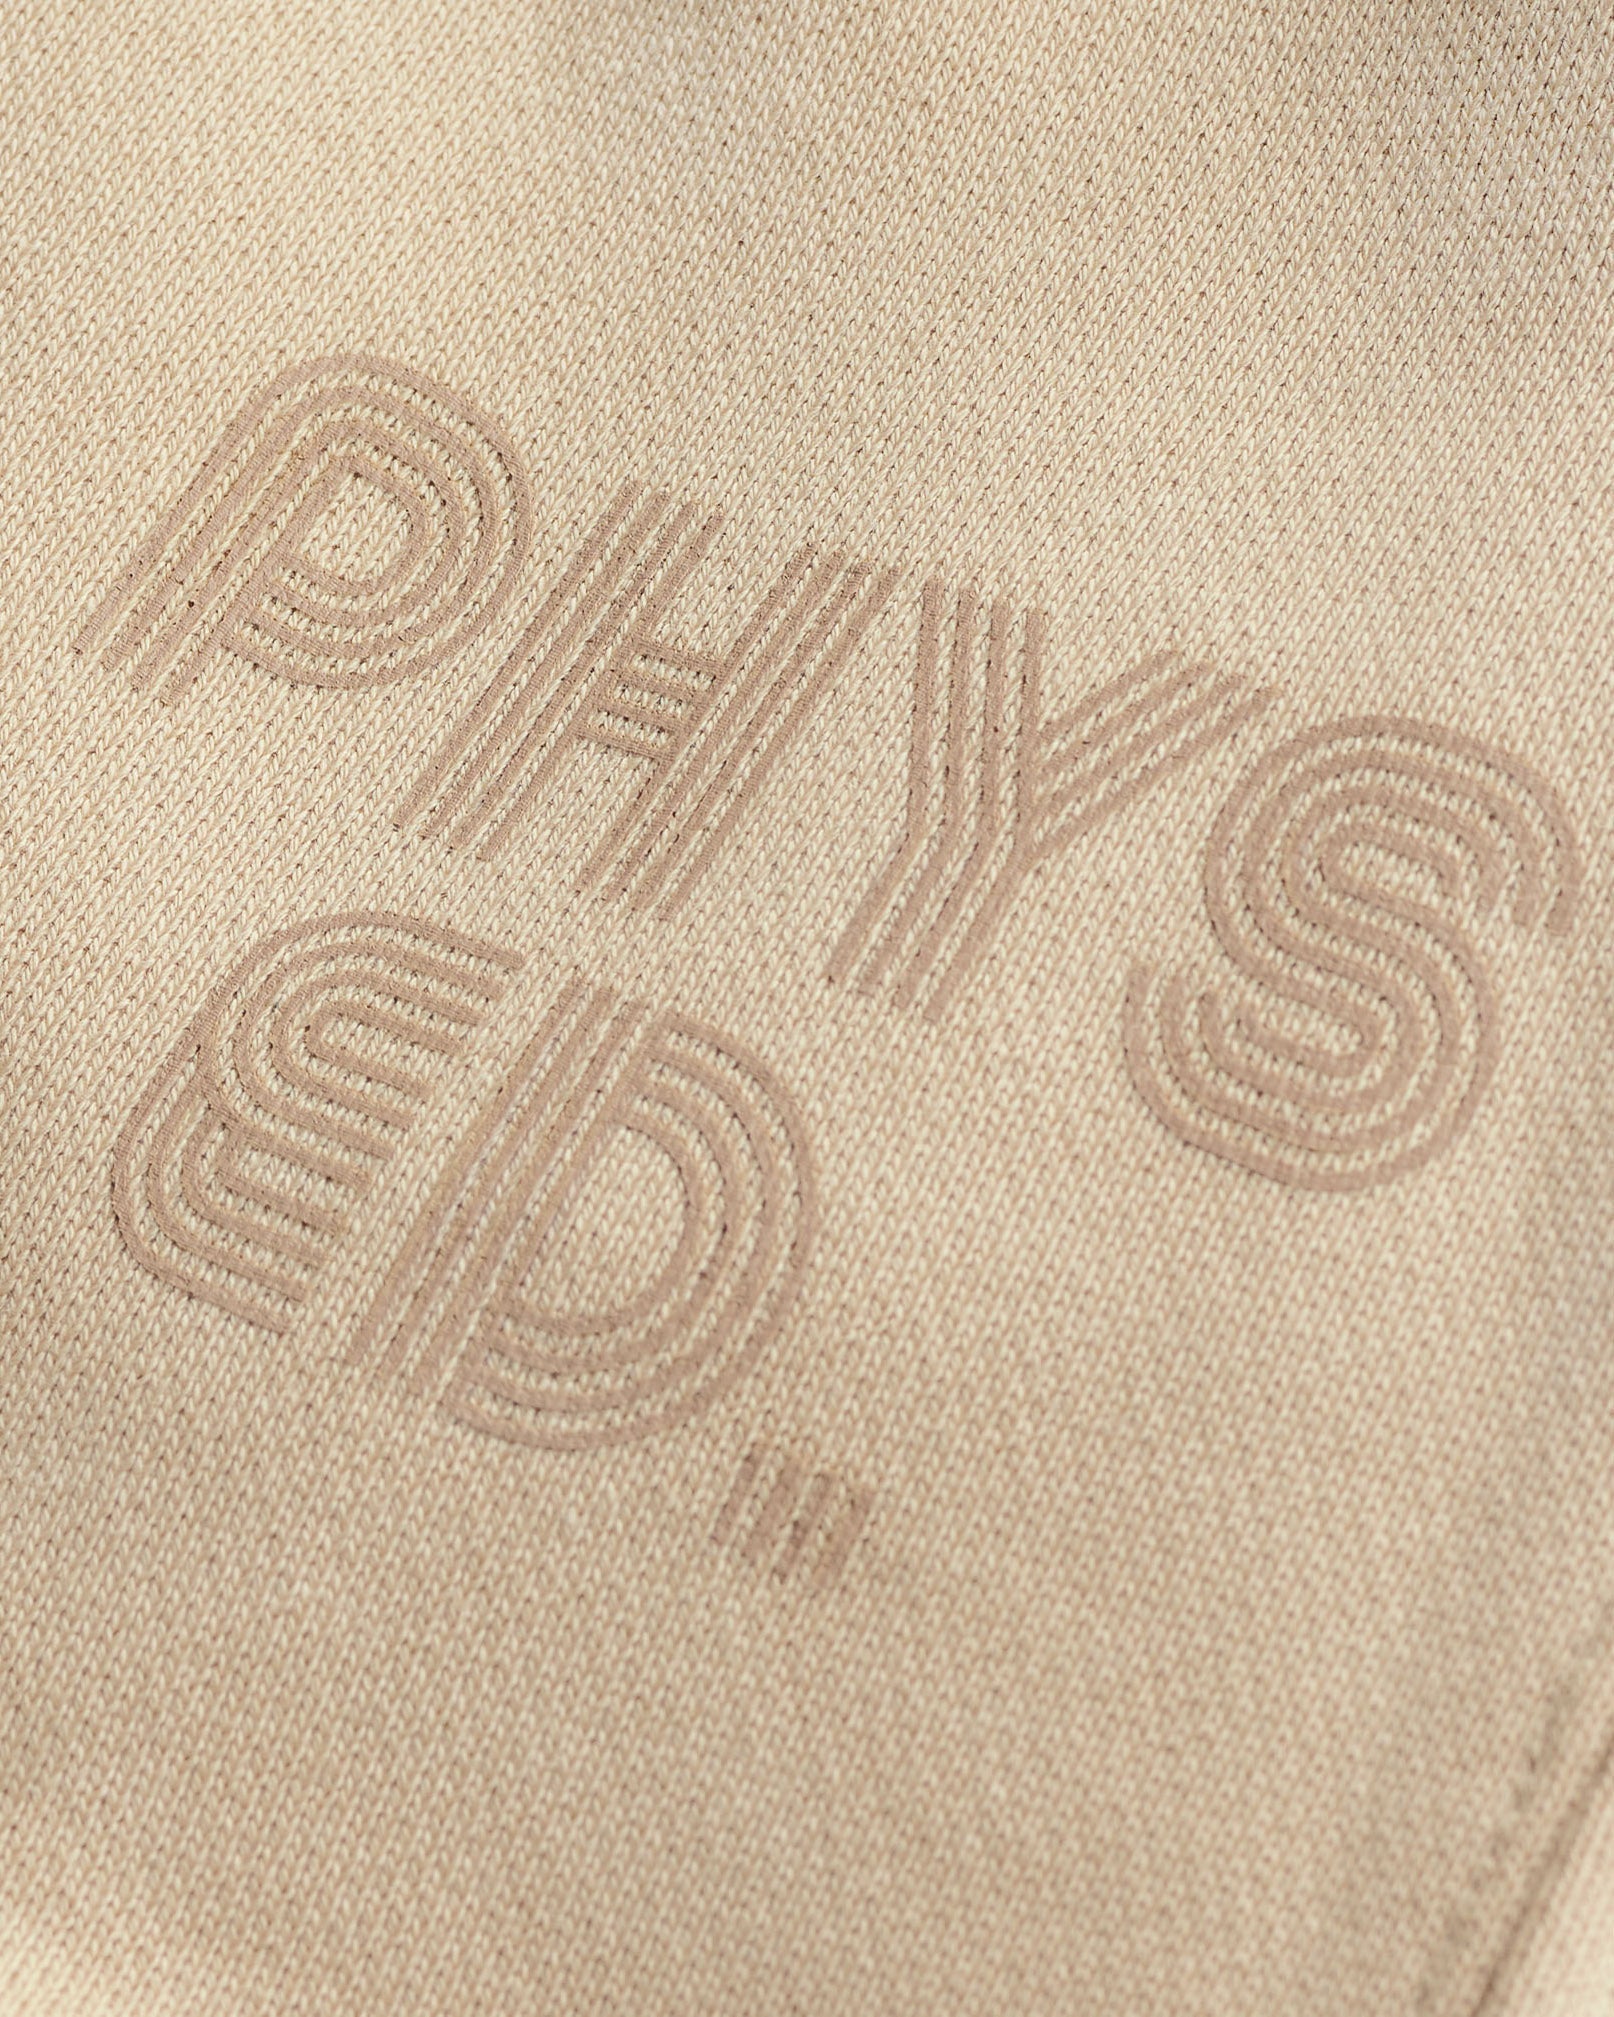 Phys Ed Graphic Sweatpants in Vanilla Beige - view 6